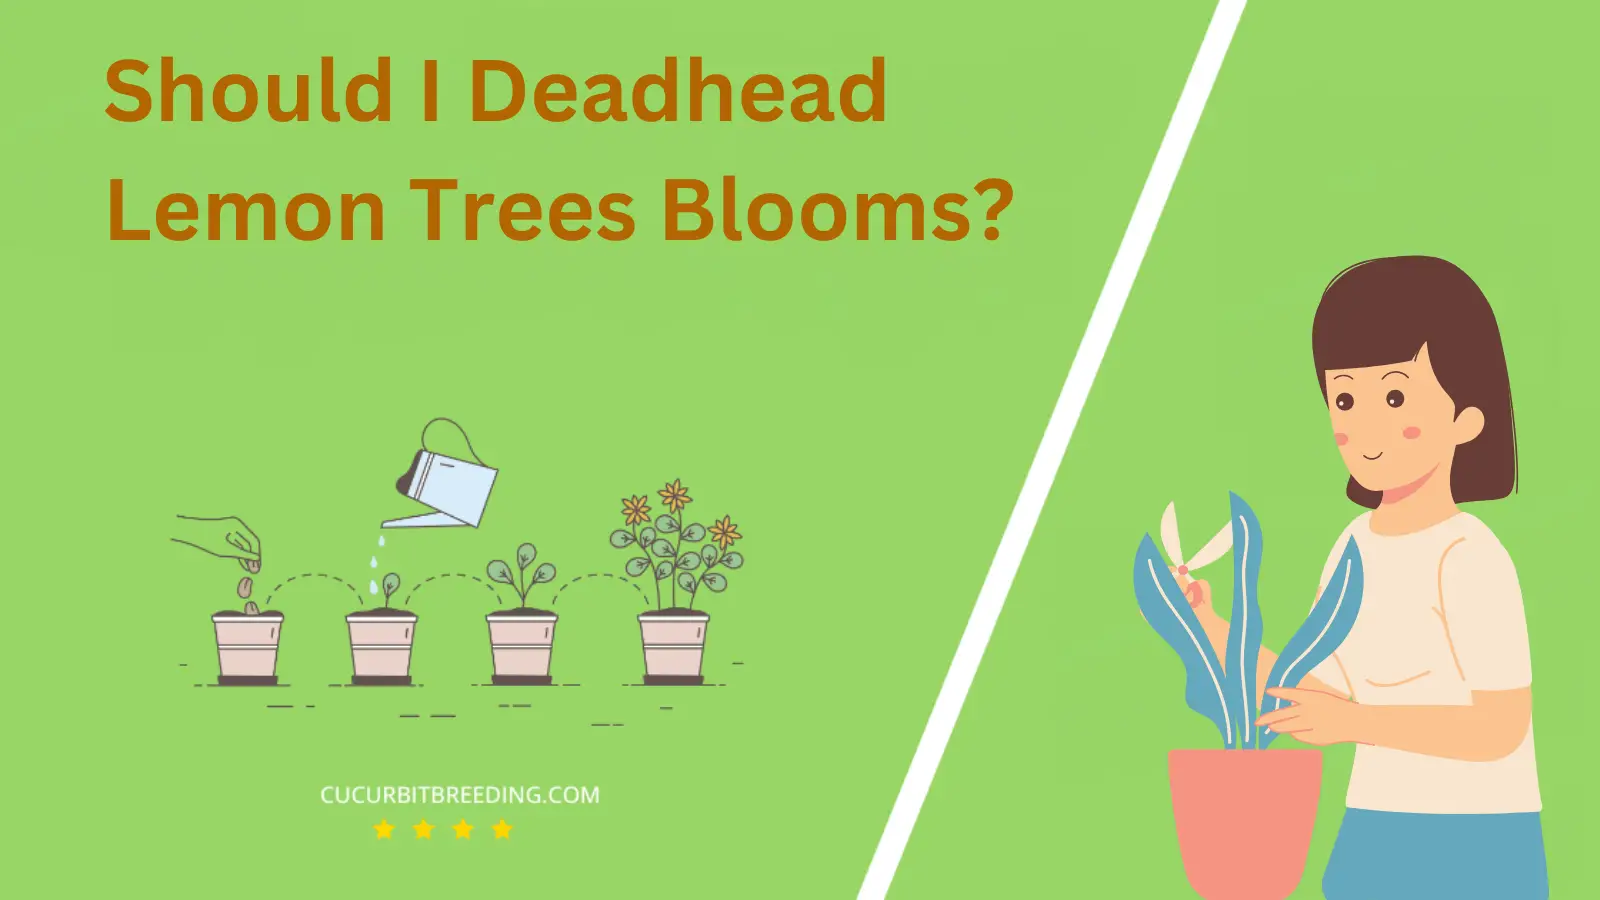 Should I Deadhead Lemon Trees Blooms?